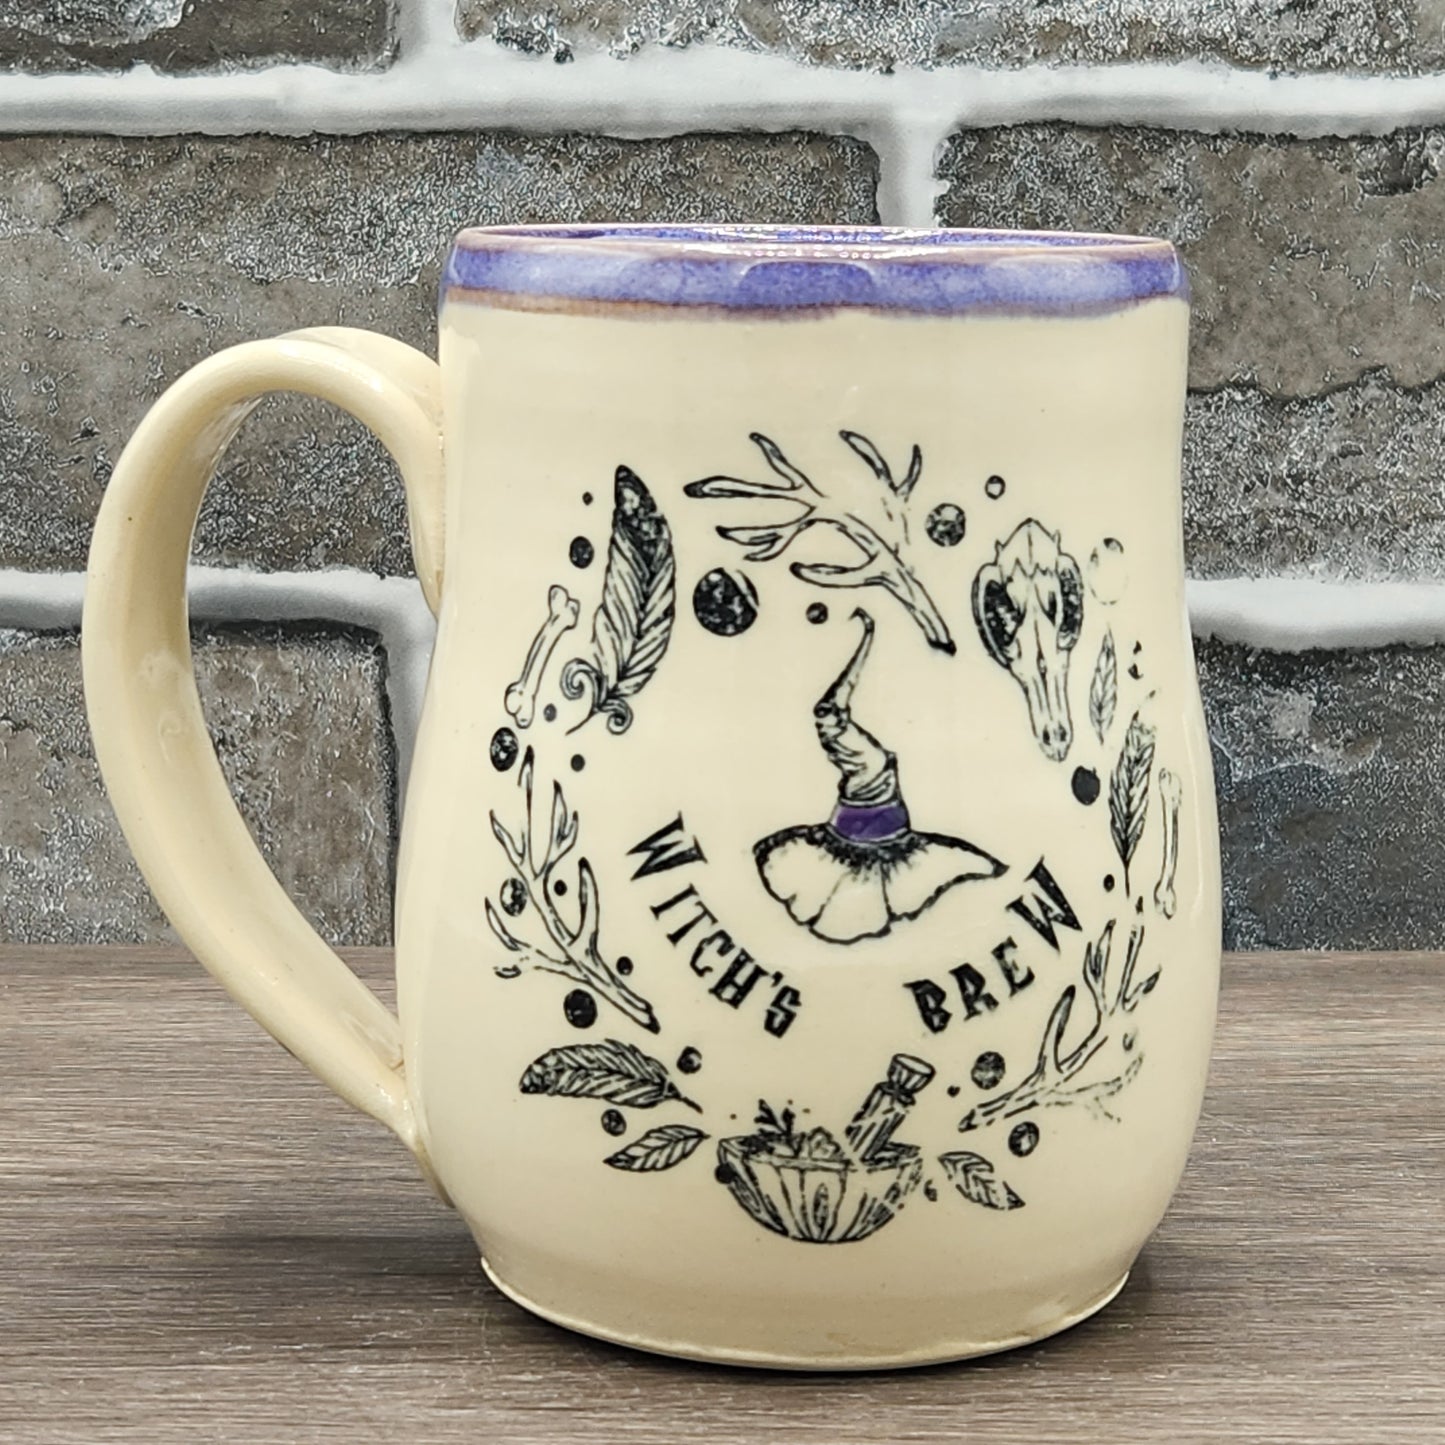 Witches Brew Mug